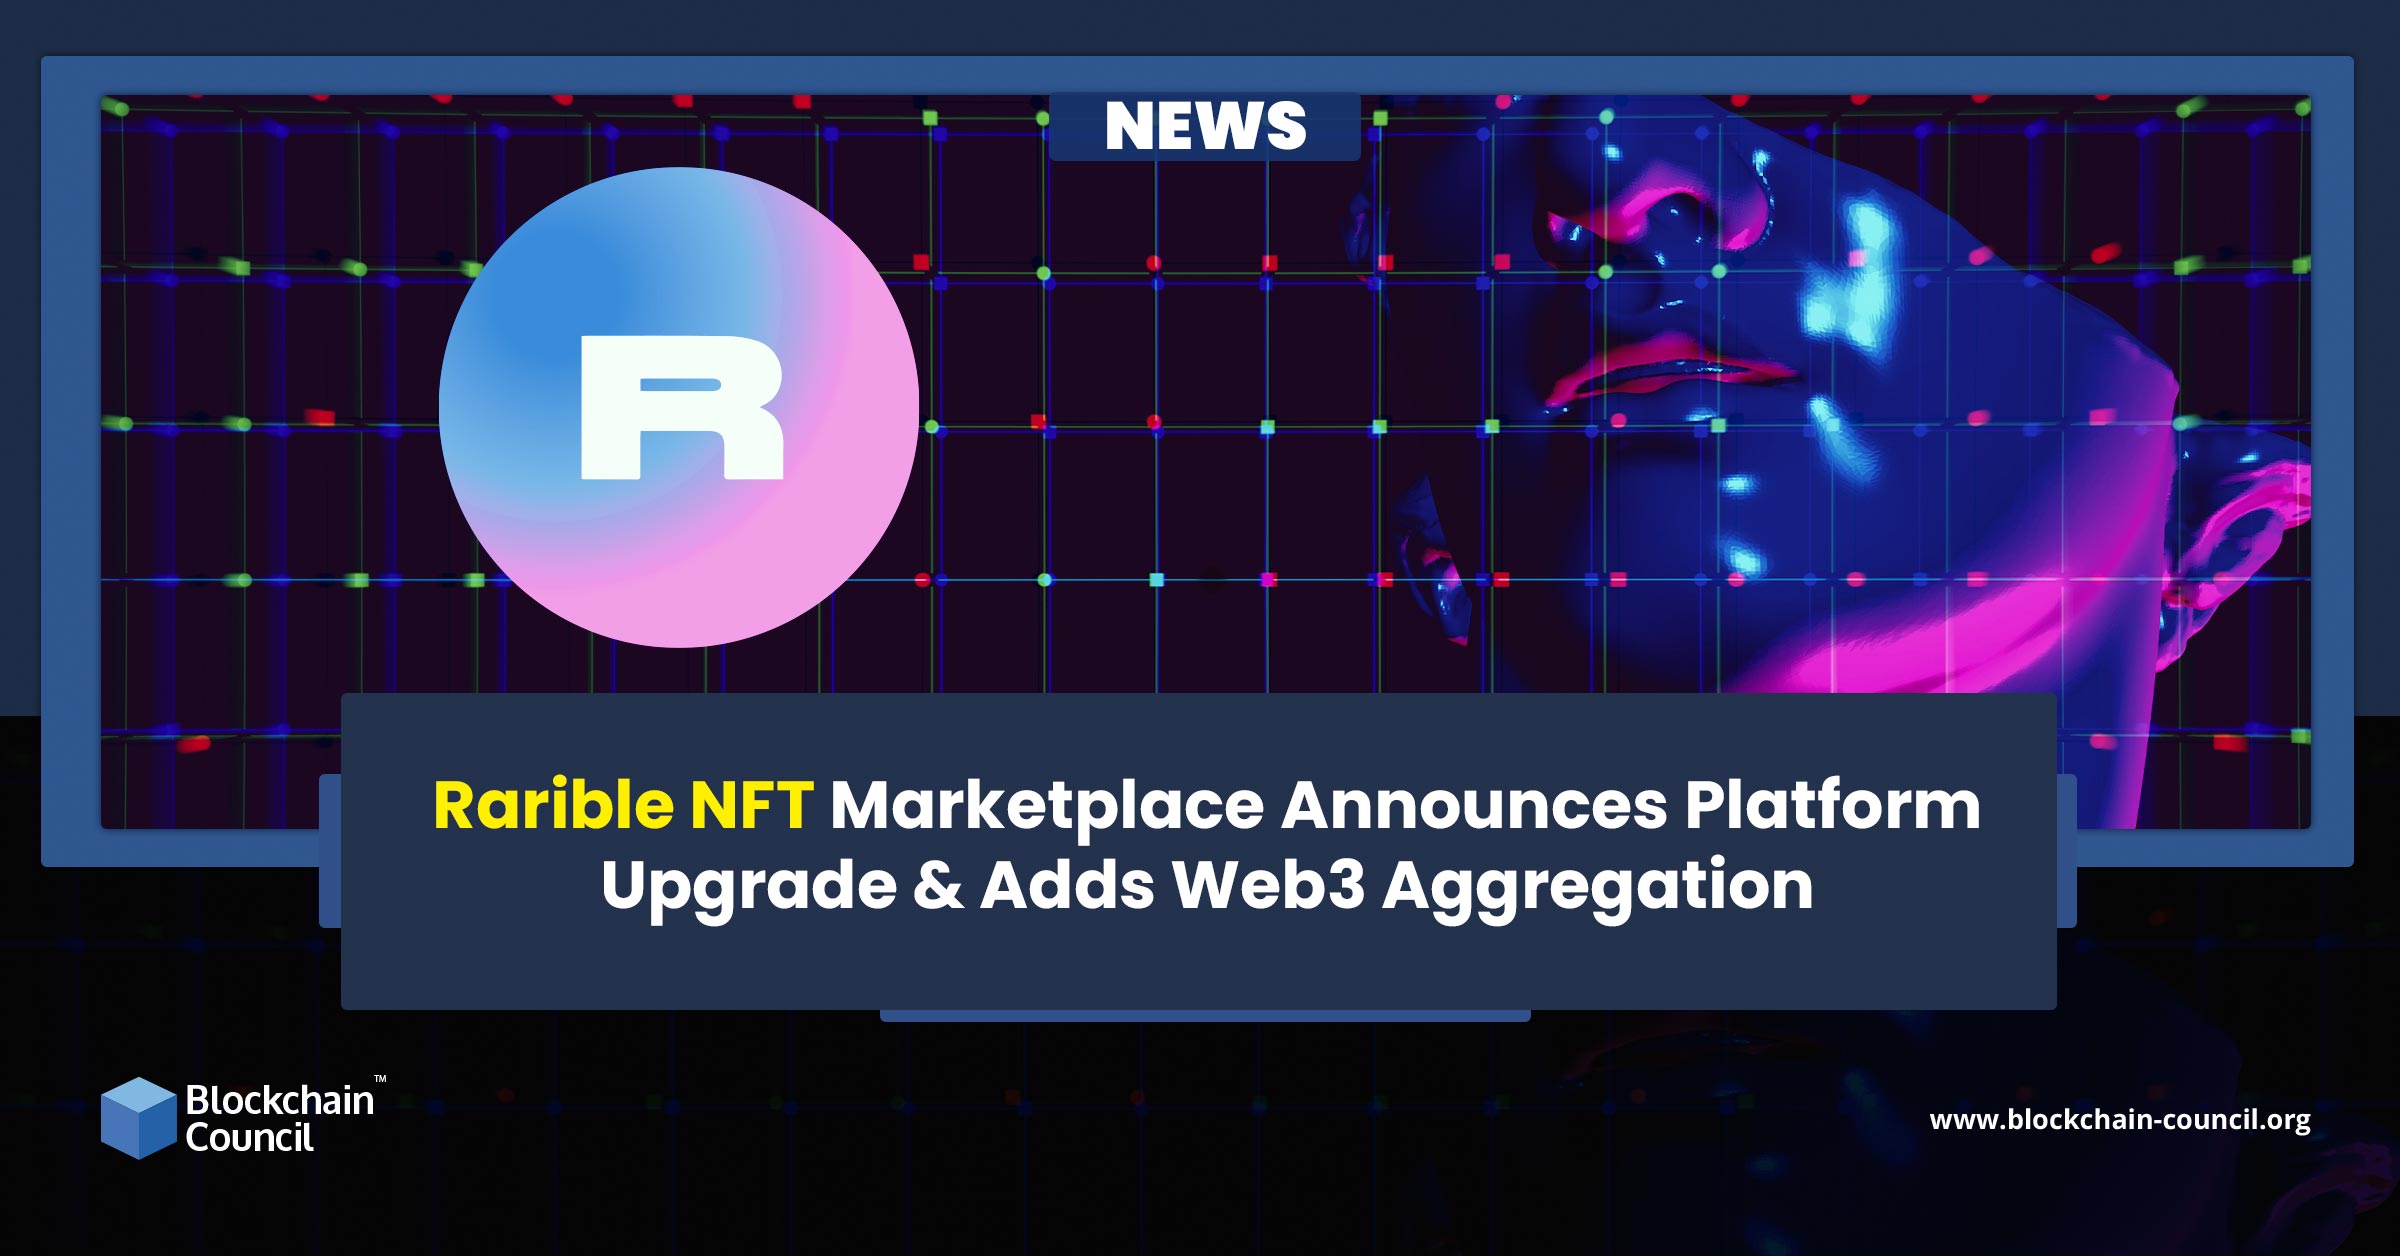 Rarible NFT Marketplace Announces Platform Upgrade & Adds Web3 Aggregation